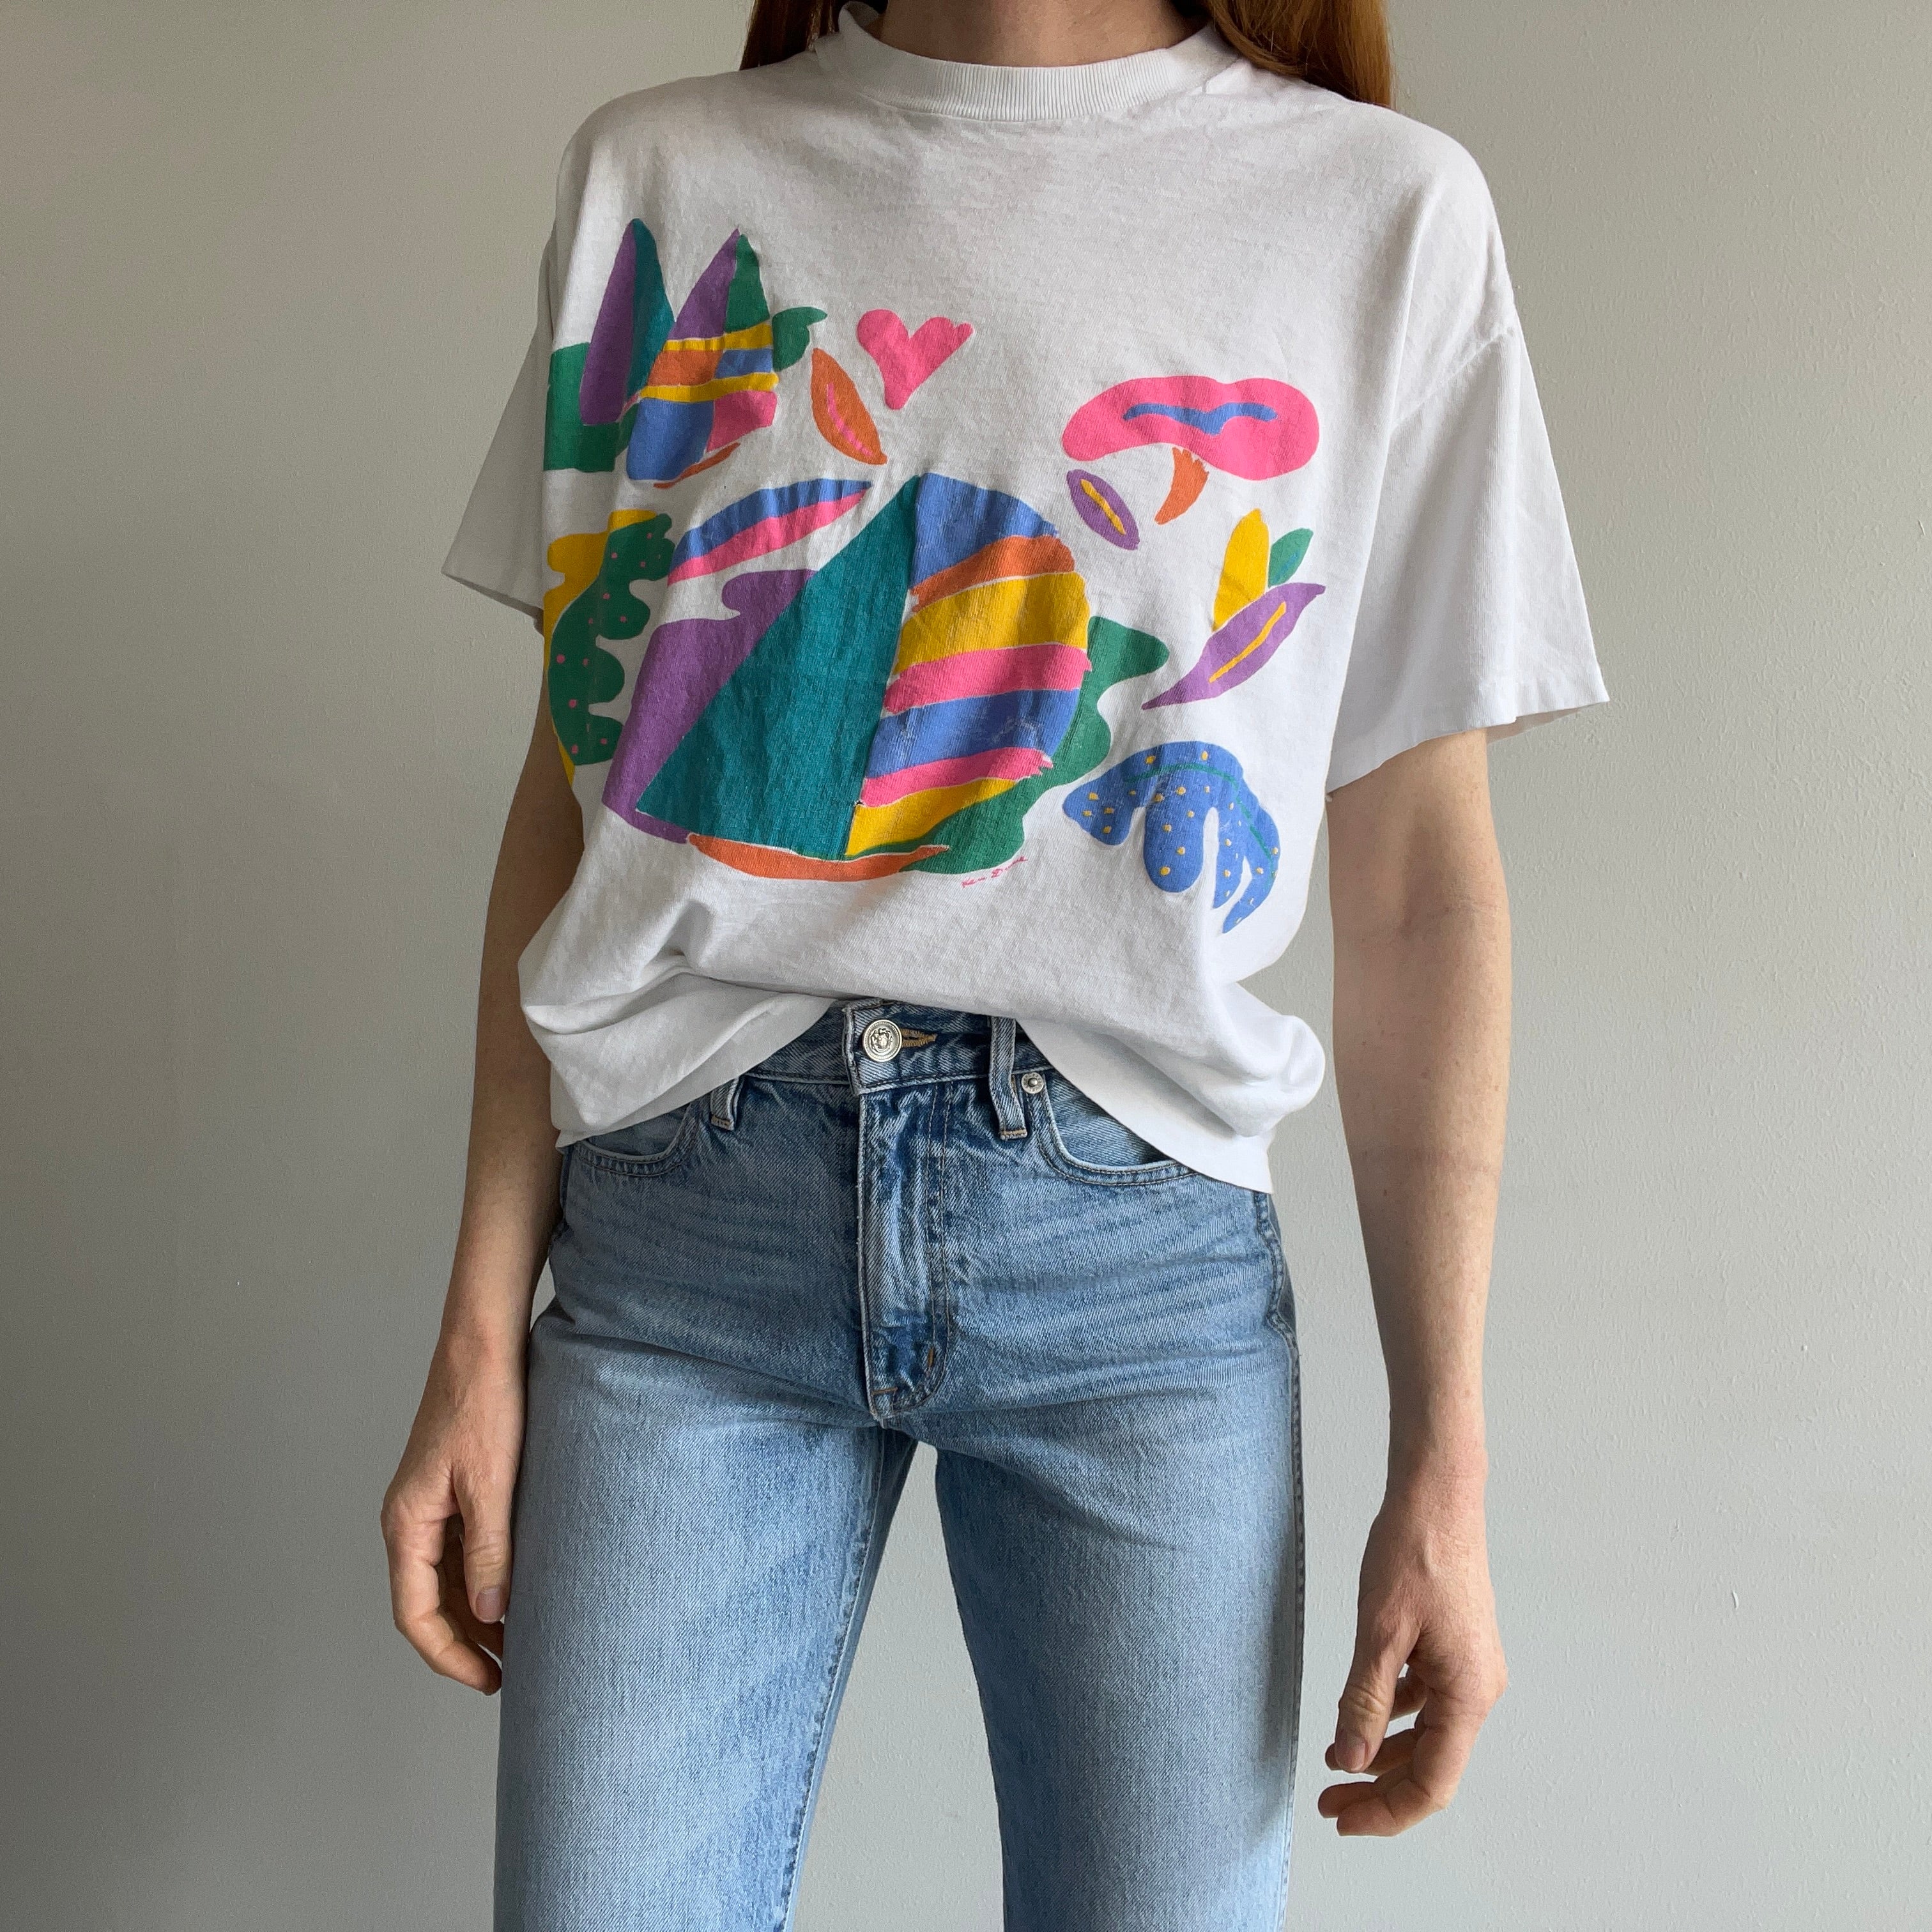 1980s Random Graphic Slouchy Cotton Knit T-Shirt